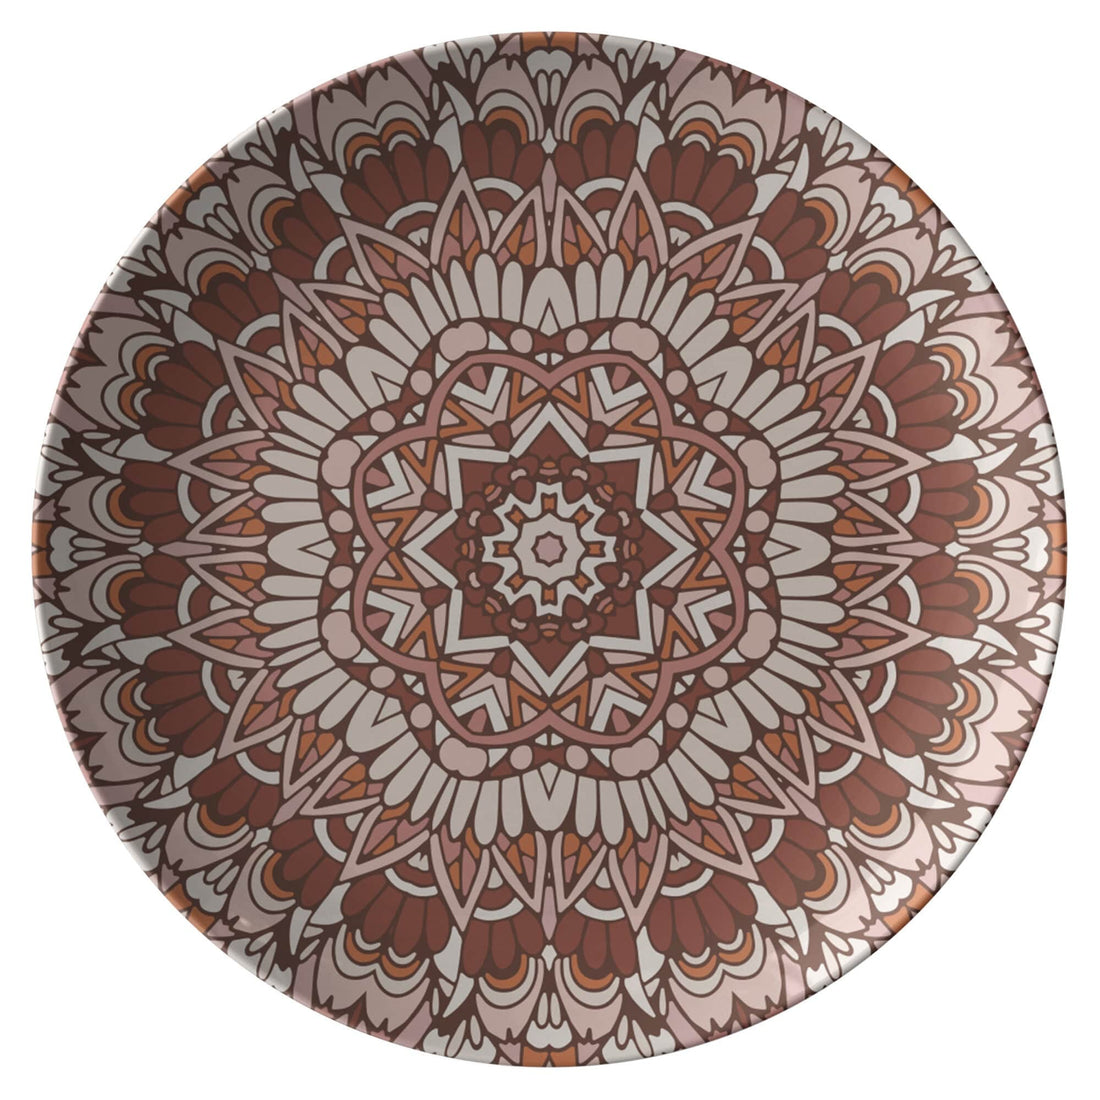 Kate McEnroe New York Brown Mandala Floral PlatePlates9820SINGLE